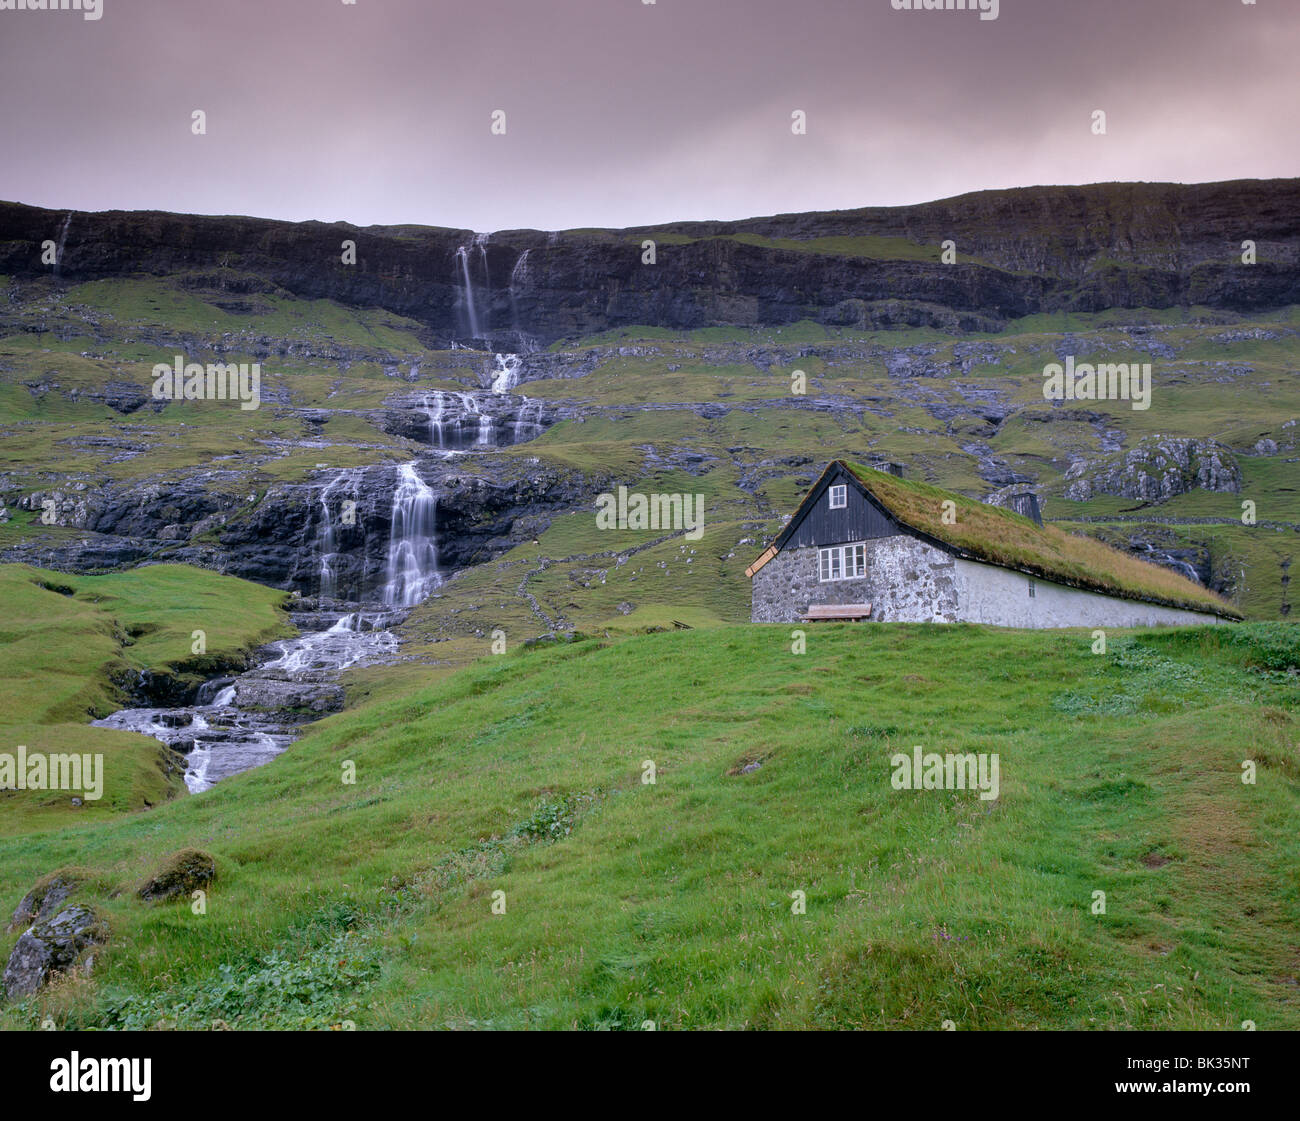 Traditional turf roofed farm building and waterfall, Saksun, Streymoy Island, Faroe Islands (Faroes), Denmark, Europe Stock Photo